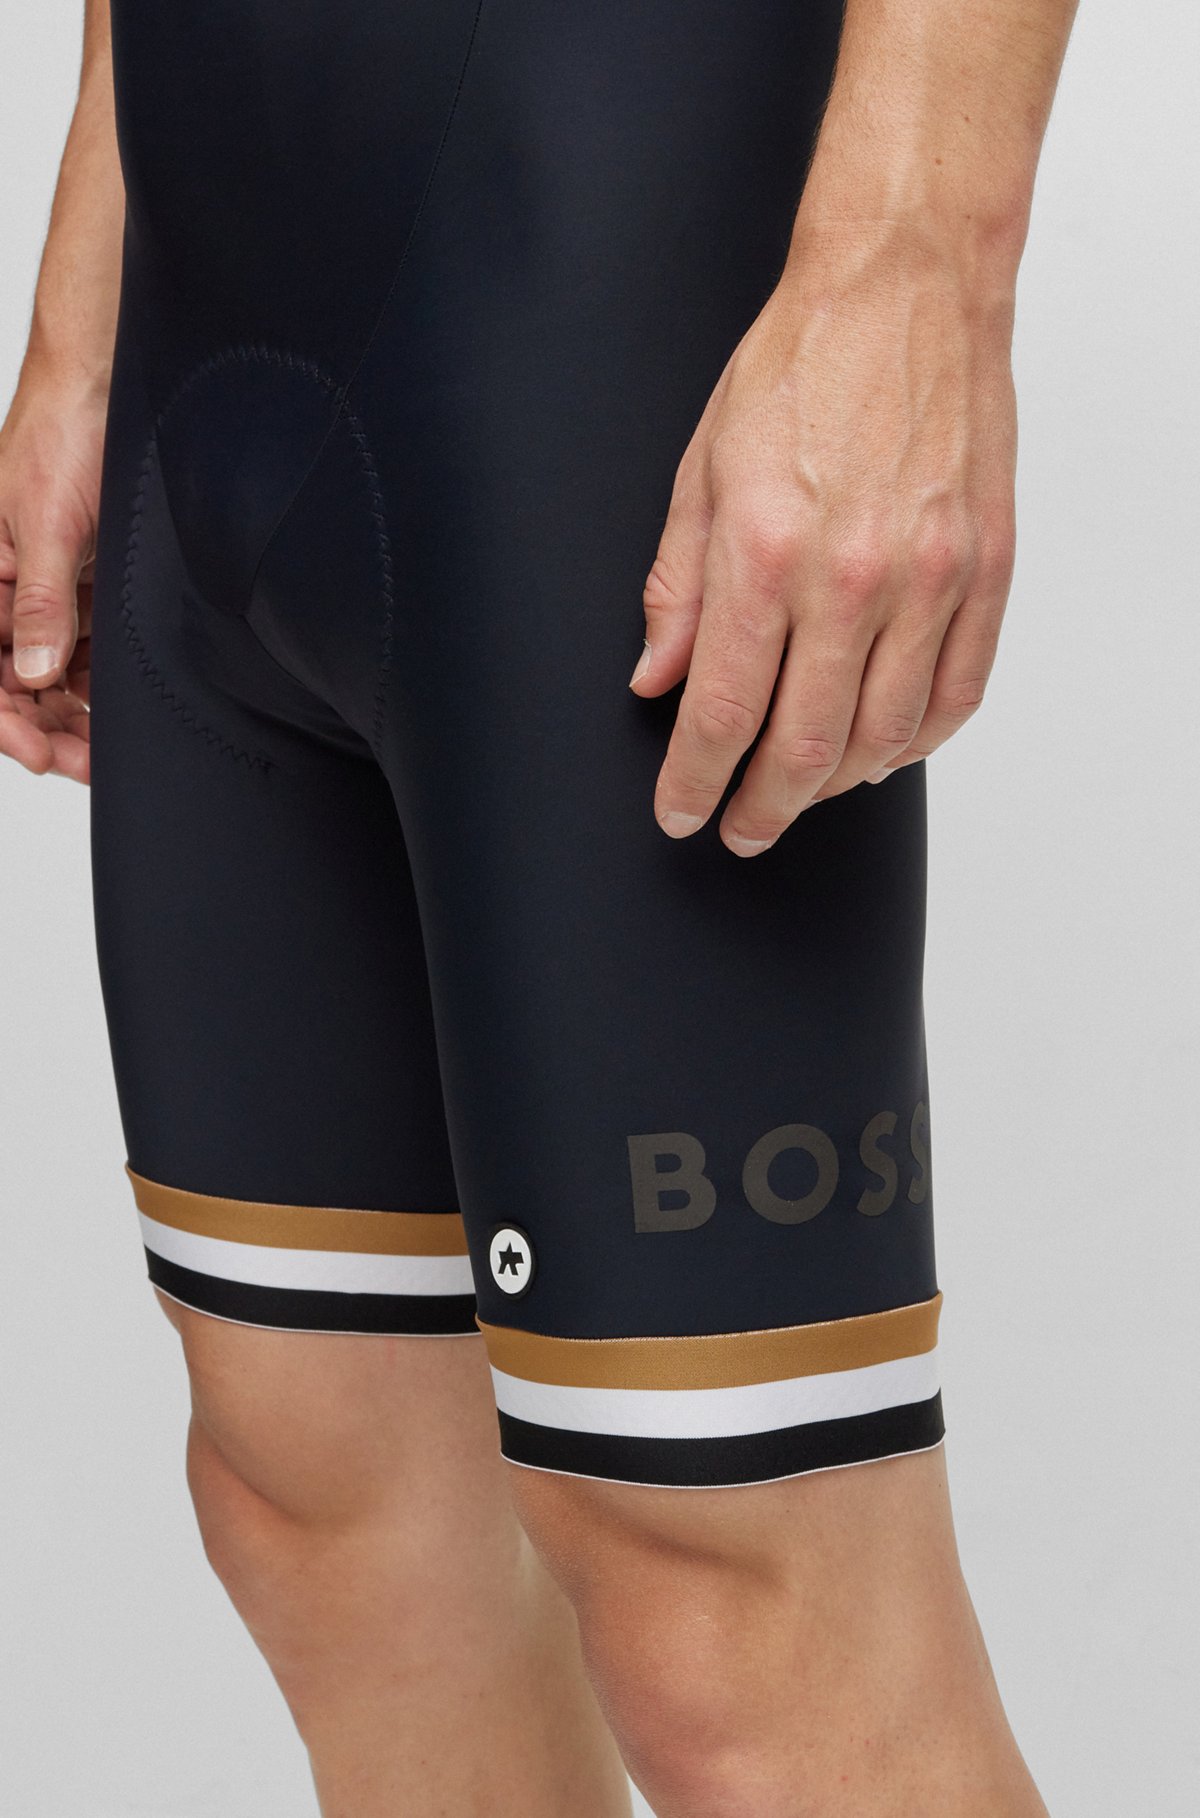 BOSS x ASSOS bib shorts with shock-absorbing foam inserts, Black